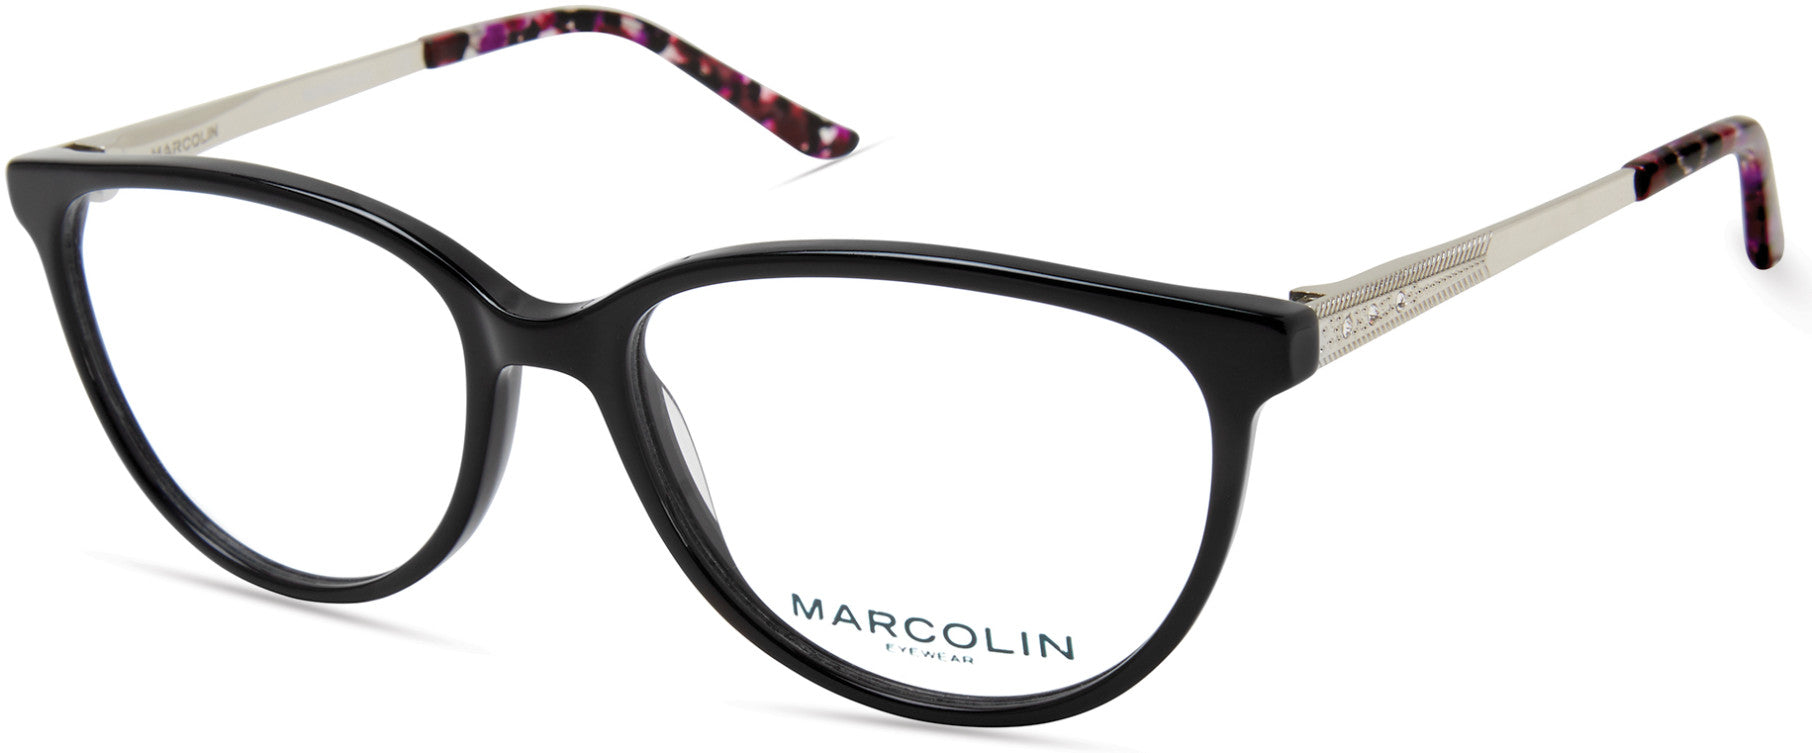 Marcolin MA5019 Square Eyeglasses 001-001 - Shiny Black